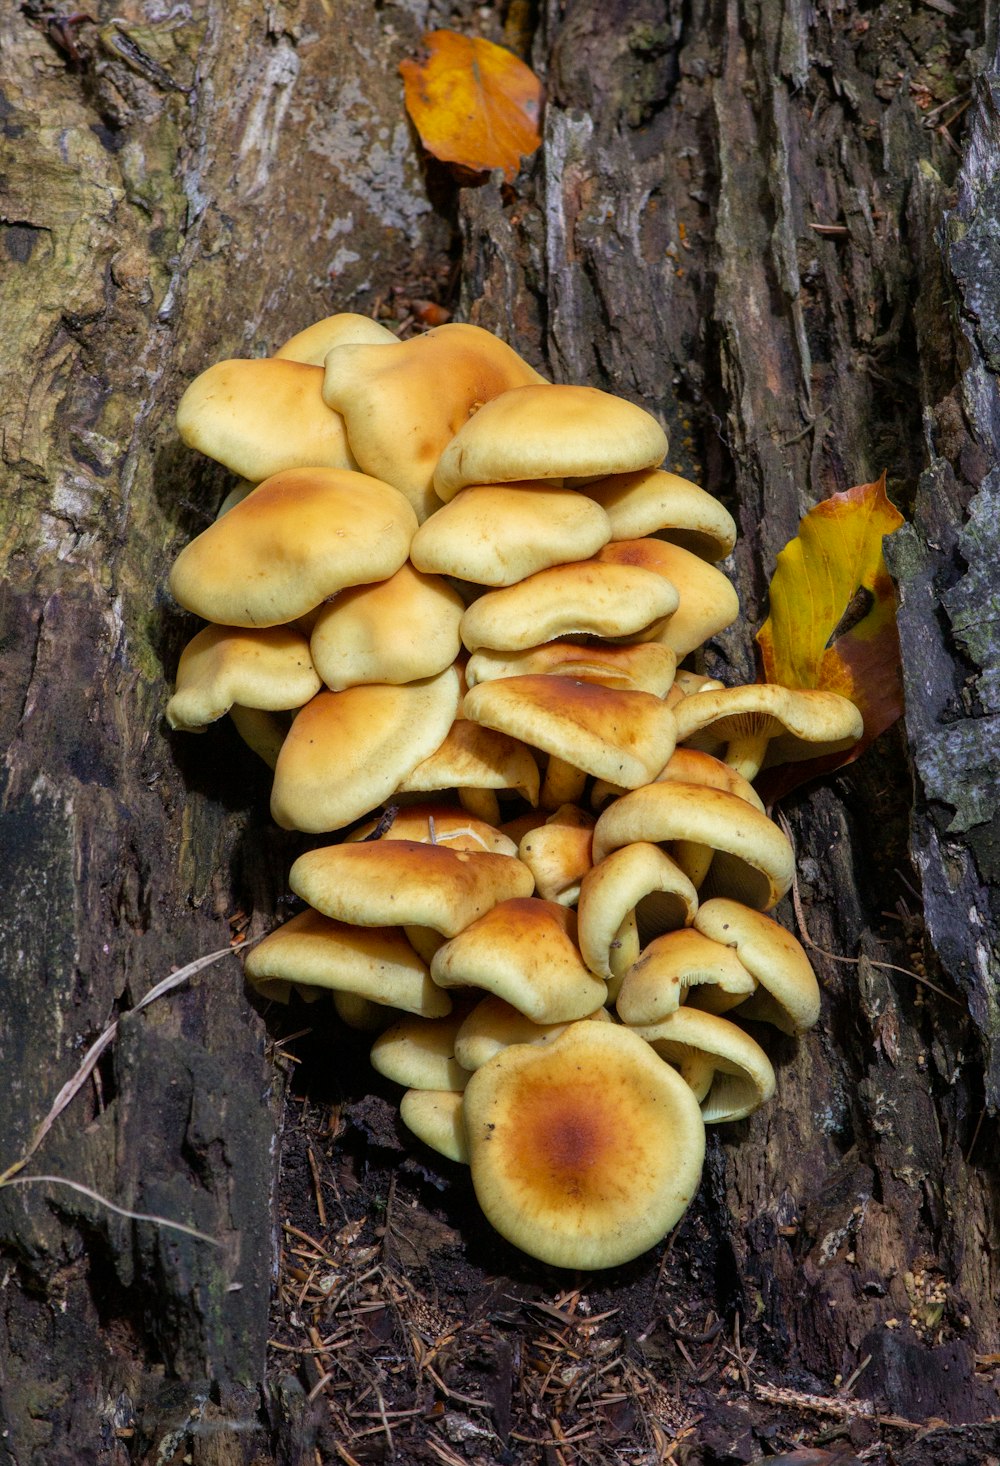 Un grupo de hongos creciendo en un árbol